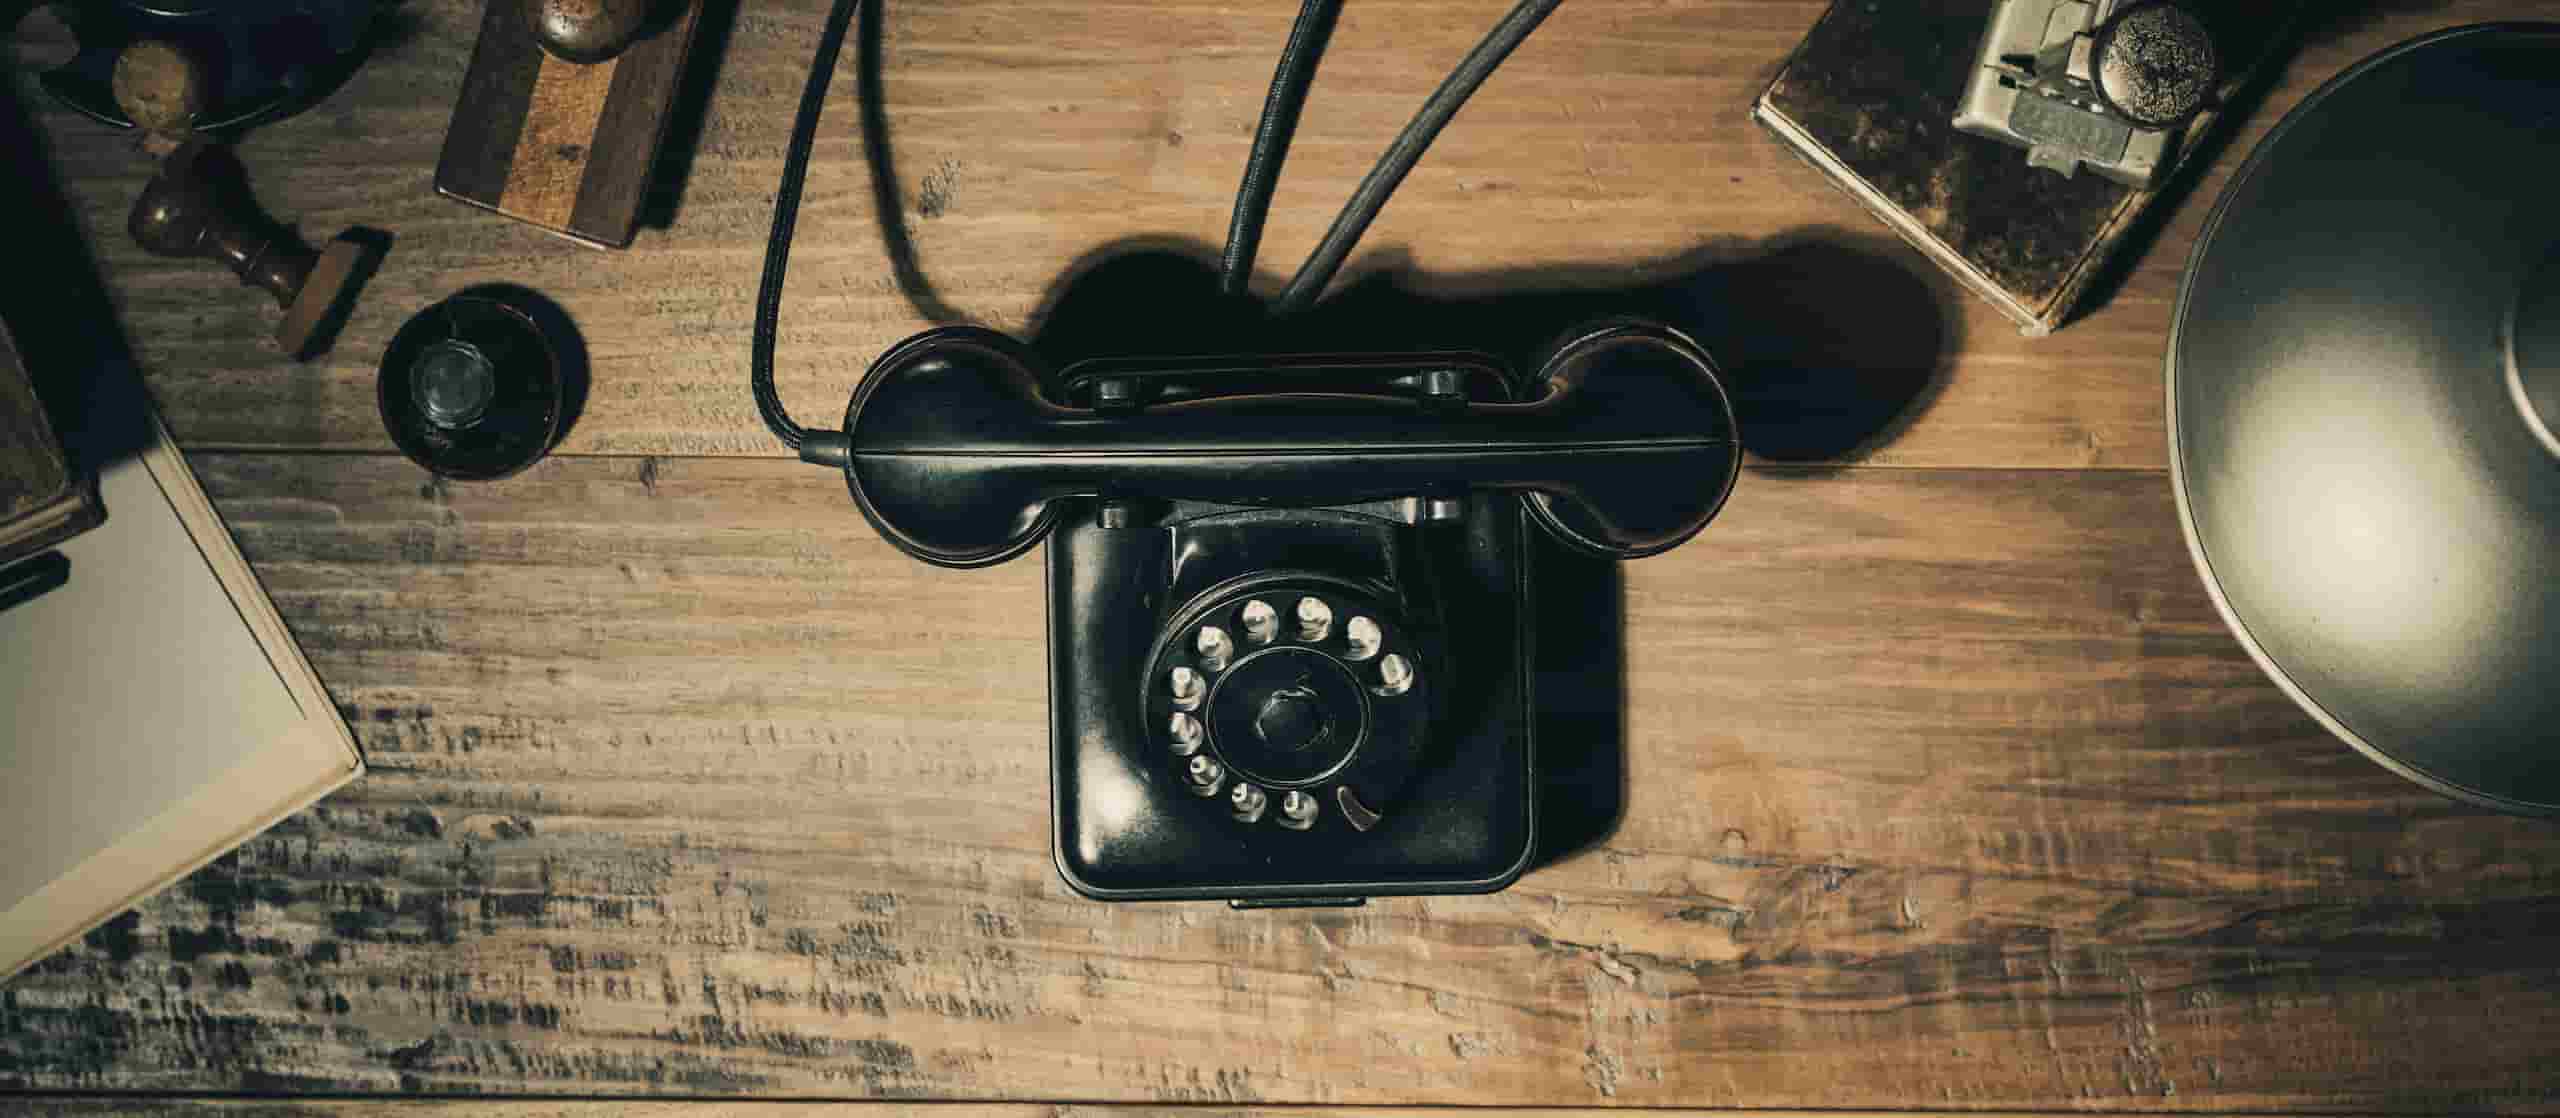 phone system